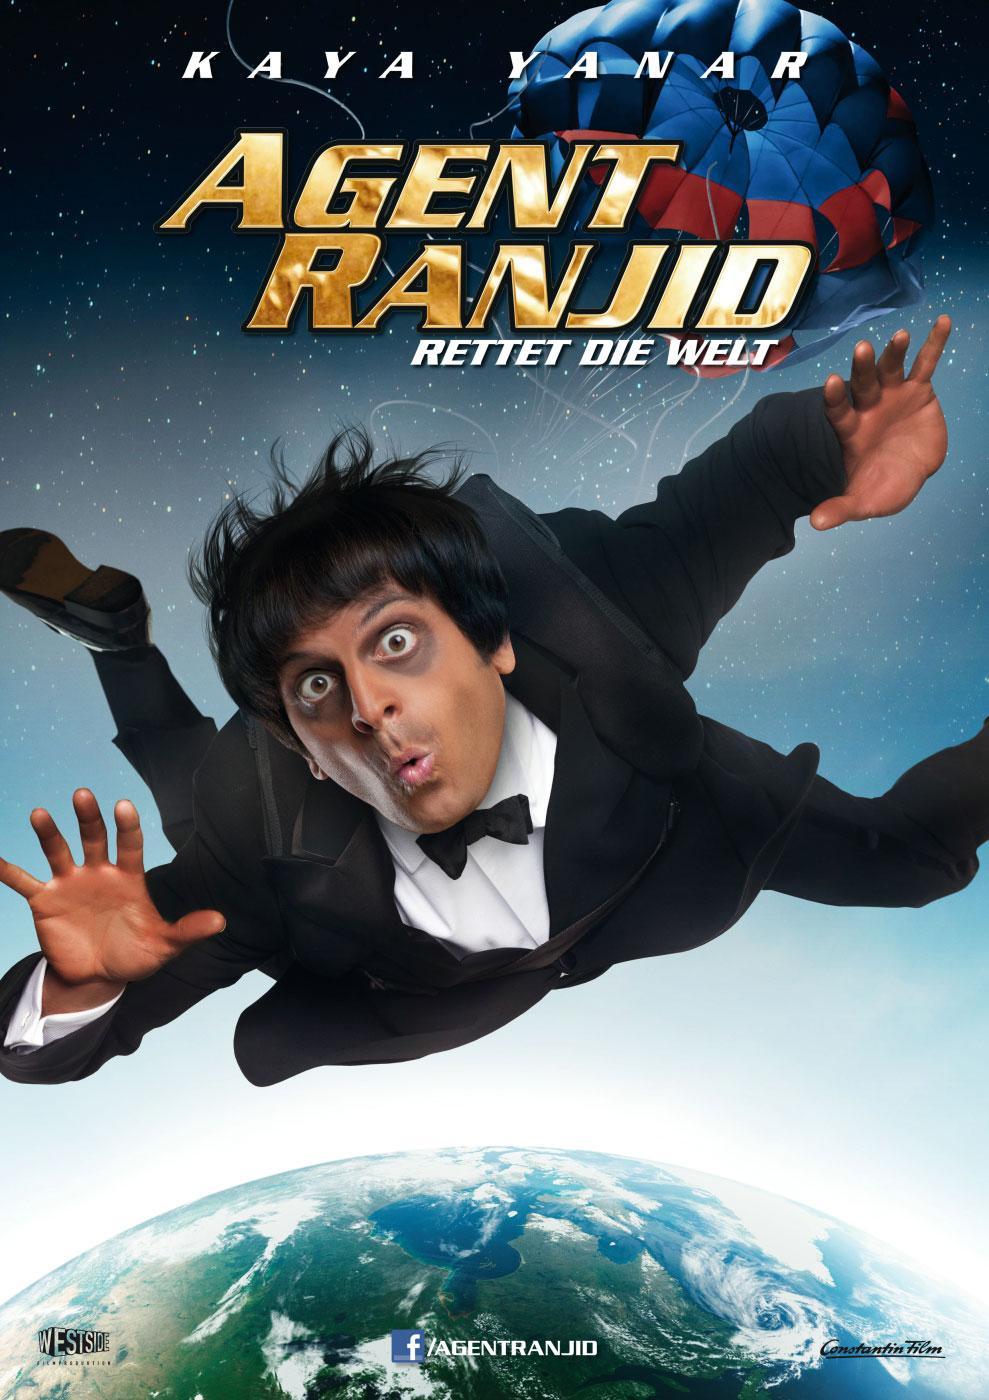 Постер фильма Агент Ранжид спасает мир | Agent Ranjid rettet die Welt